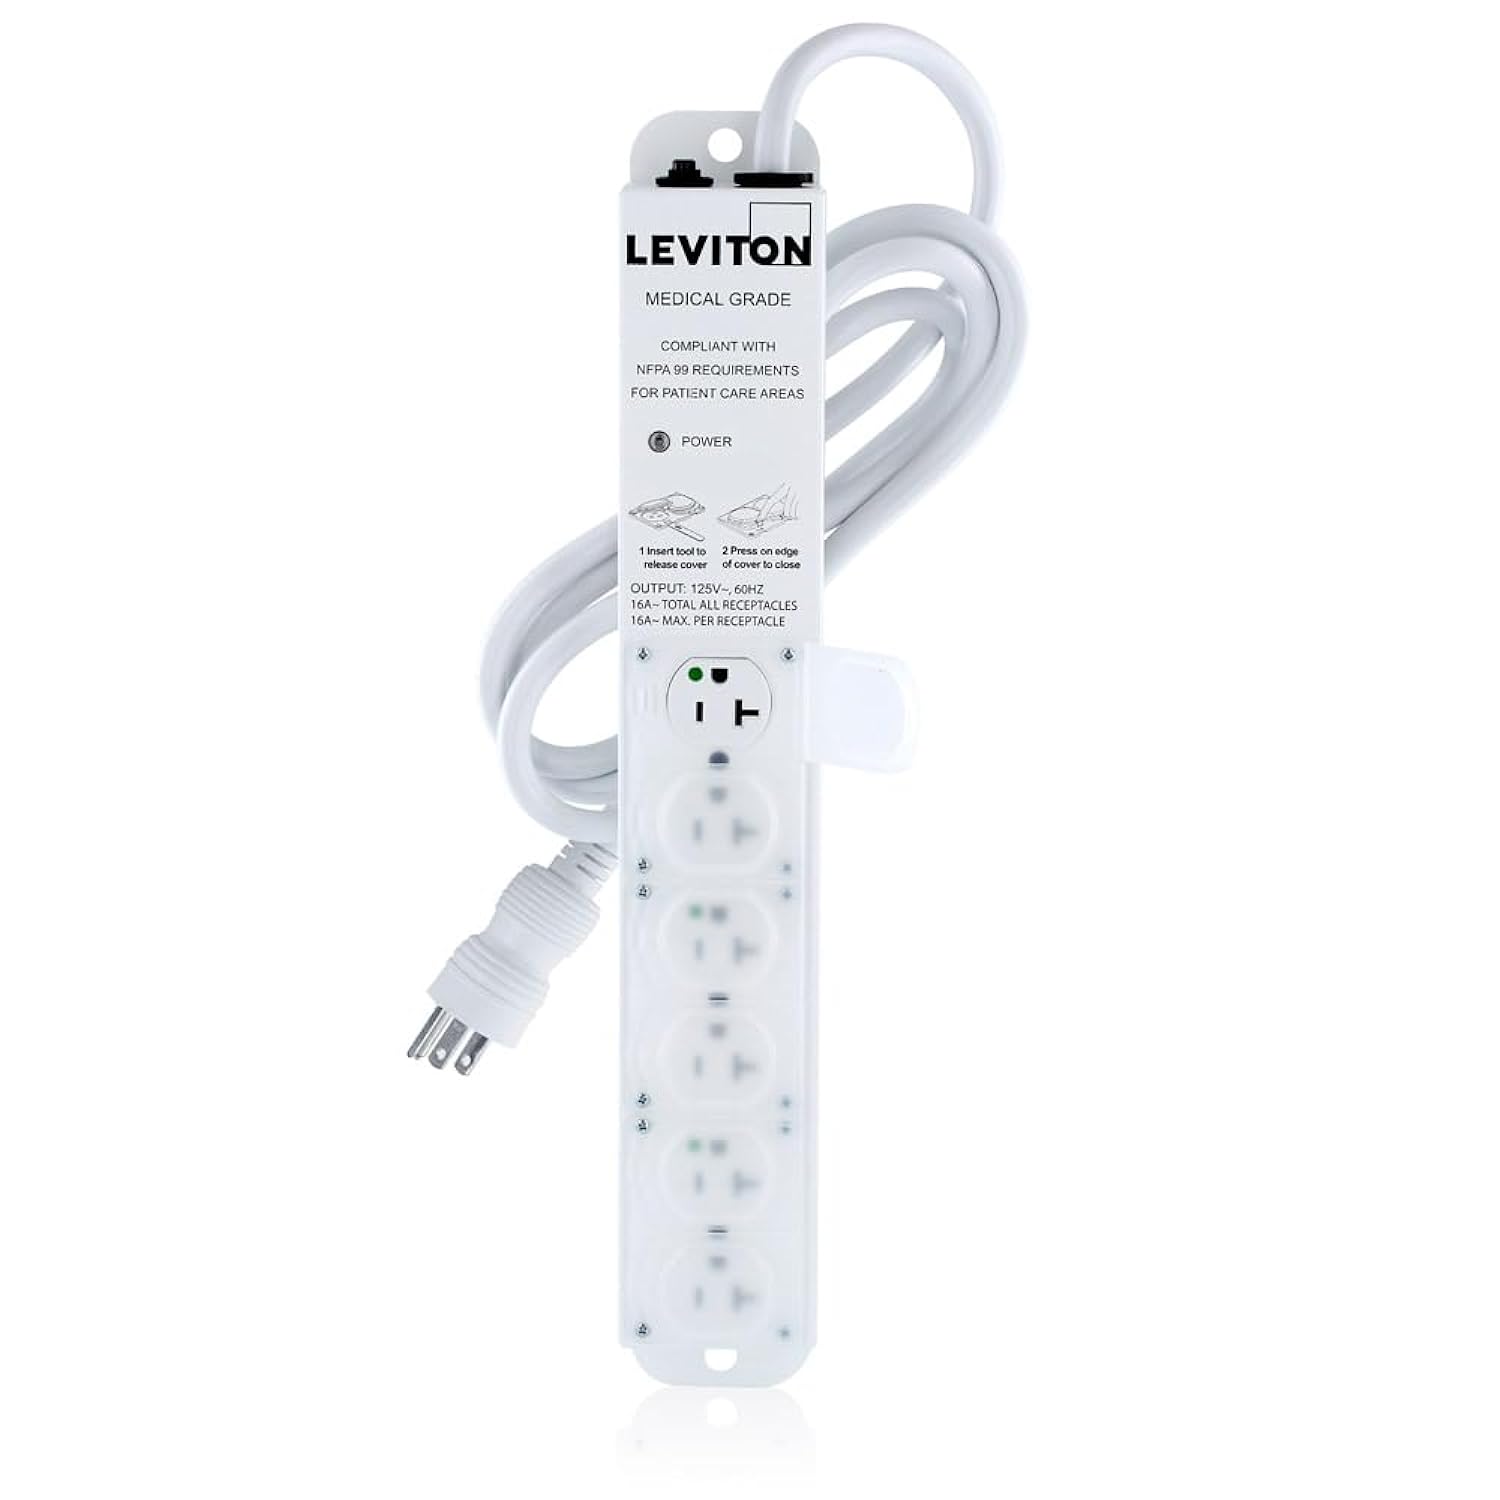 Leviton 5306M-2N7 20 Amp Medical Grade Power Strip, 6-Outlet, 7' Cord, Image